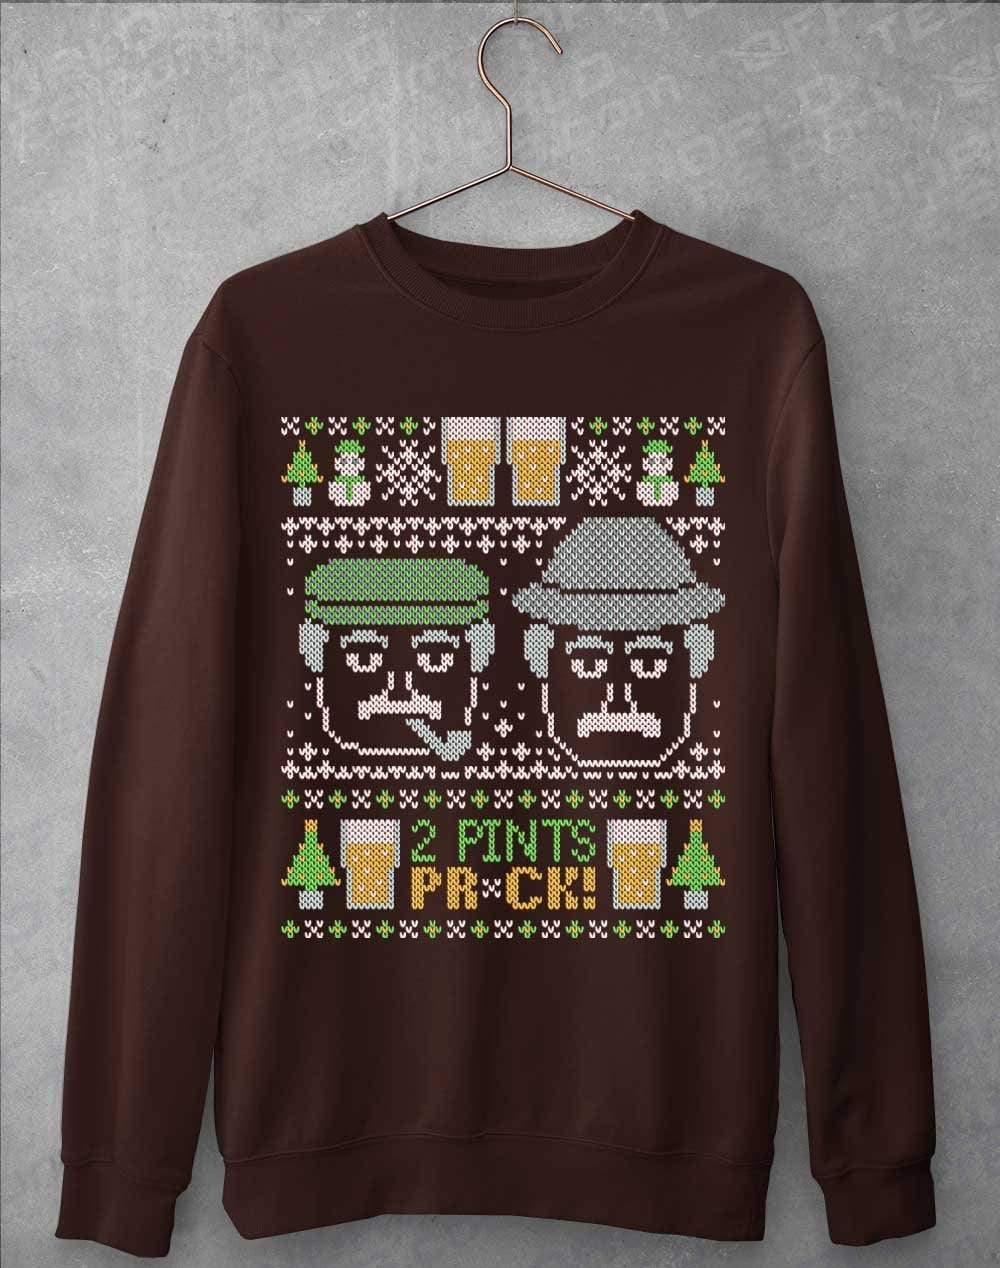 Craiglang Christmas 2 Pints Knit Pattern Sweatshirt  - Off World Tees